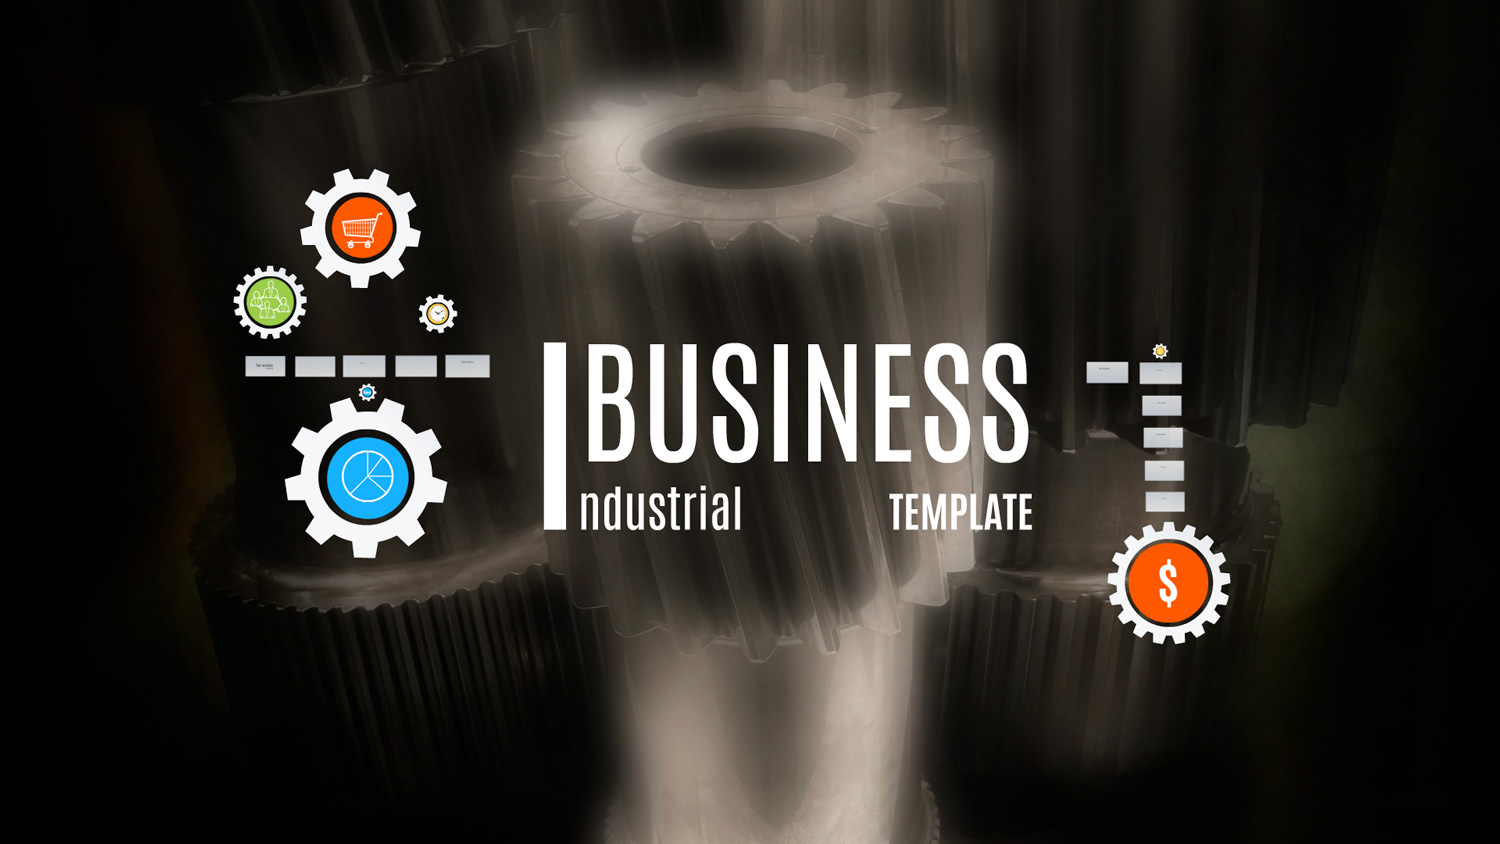 Industrial Business - Prezi templateIndustrial Business - Prezi template